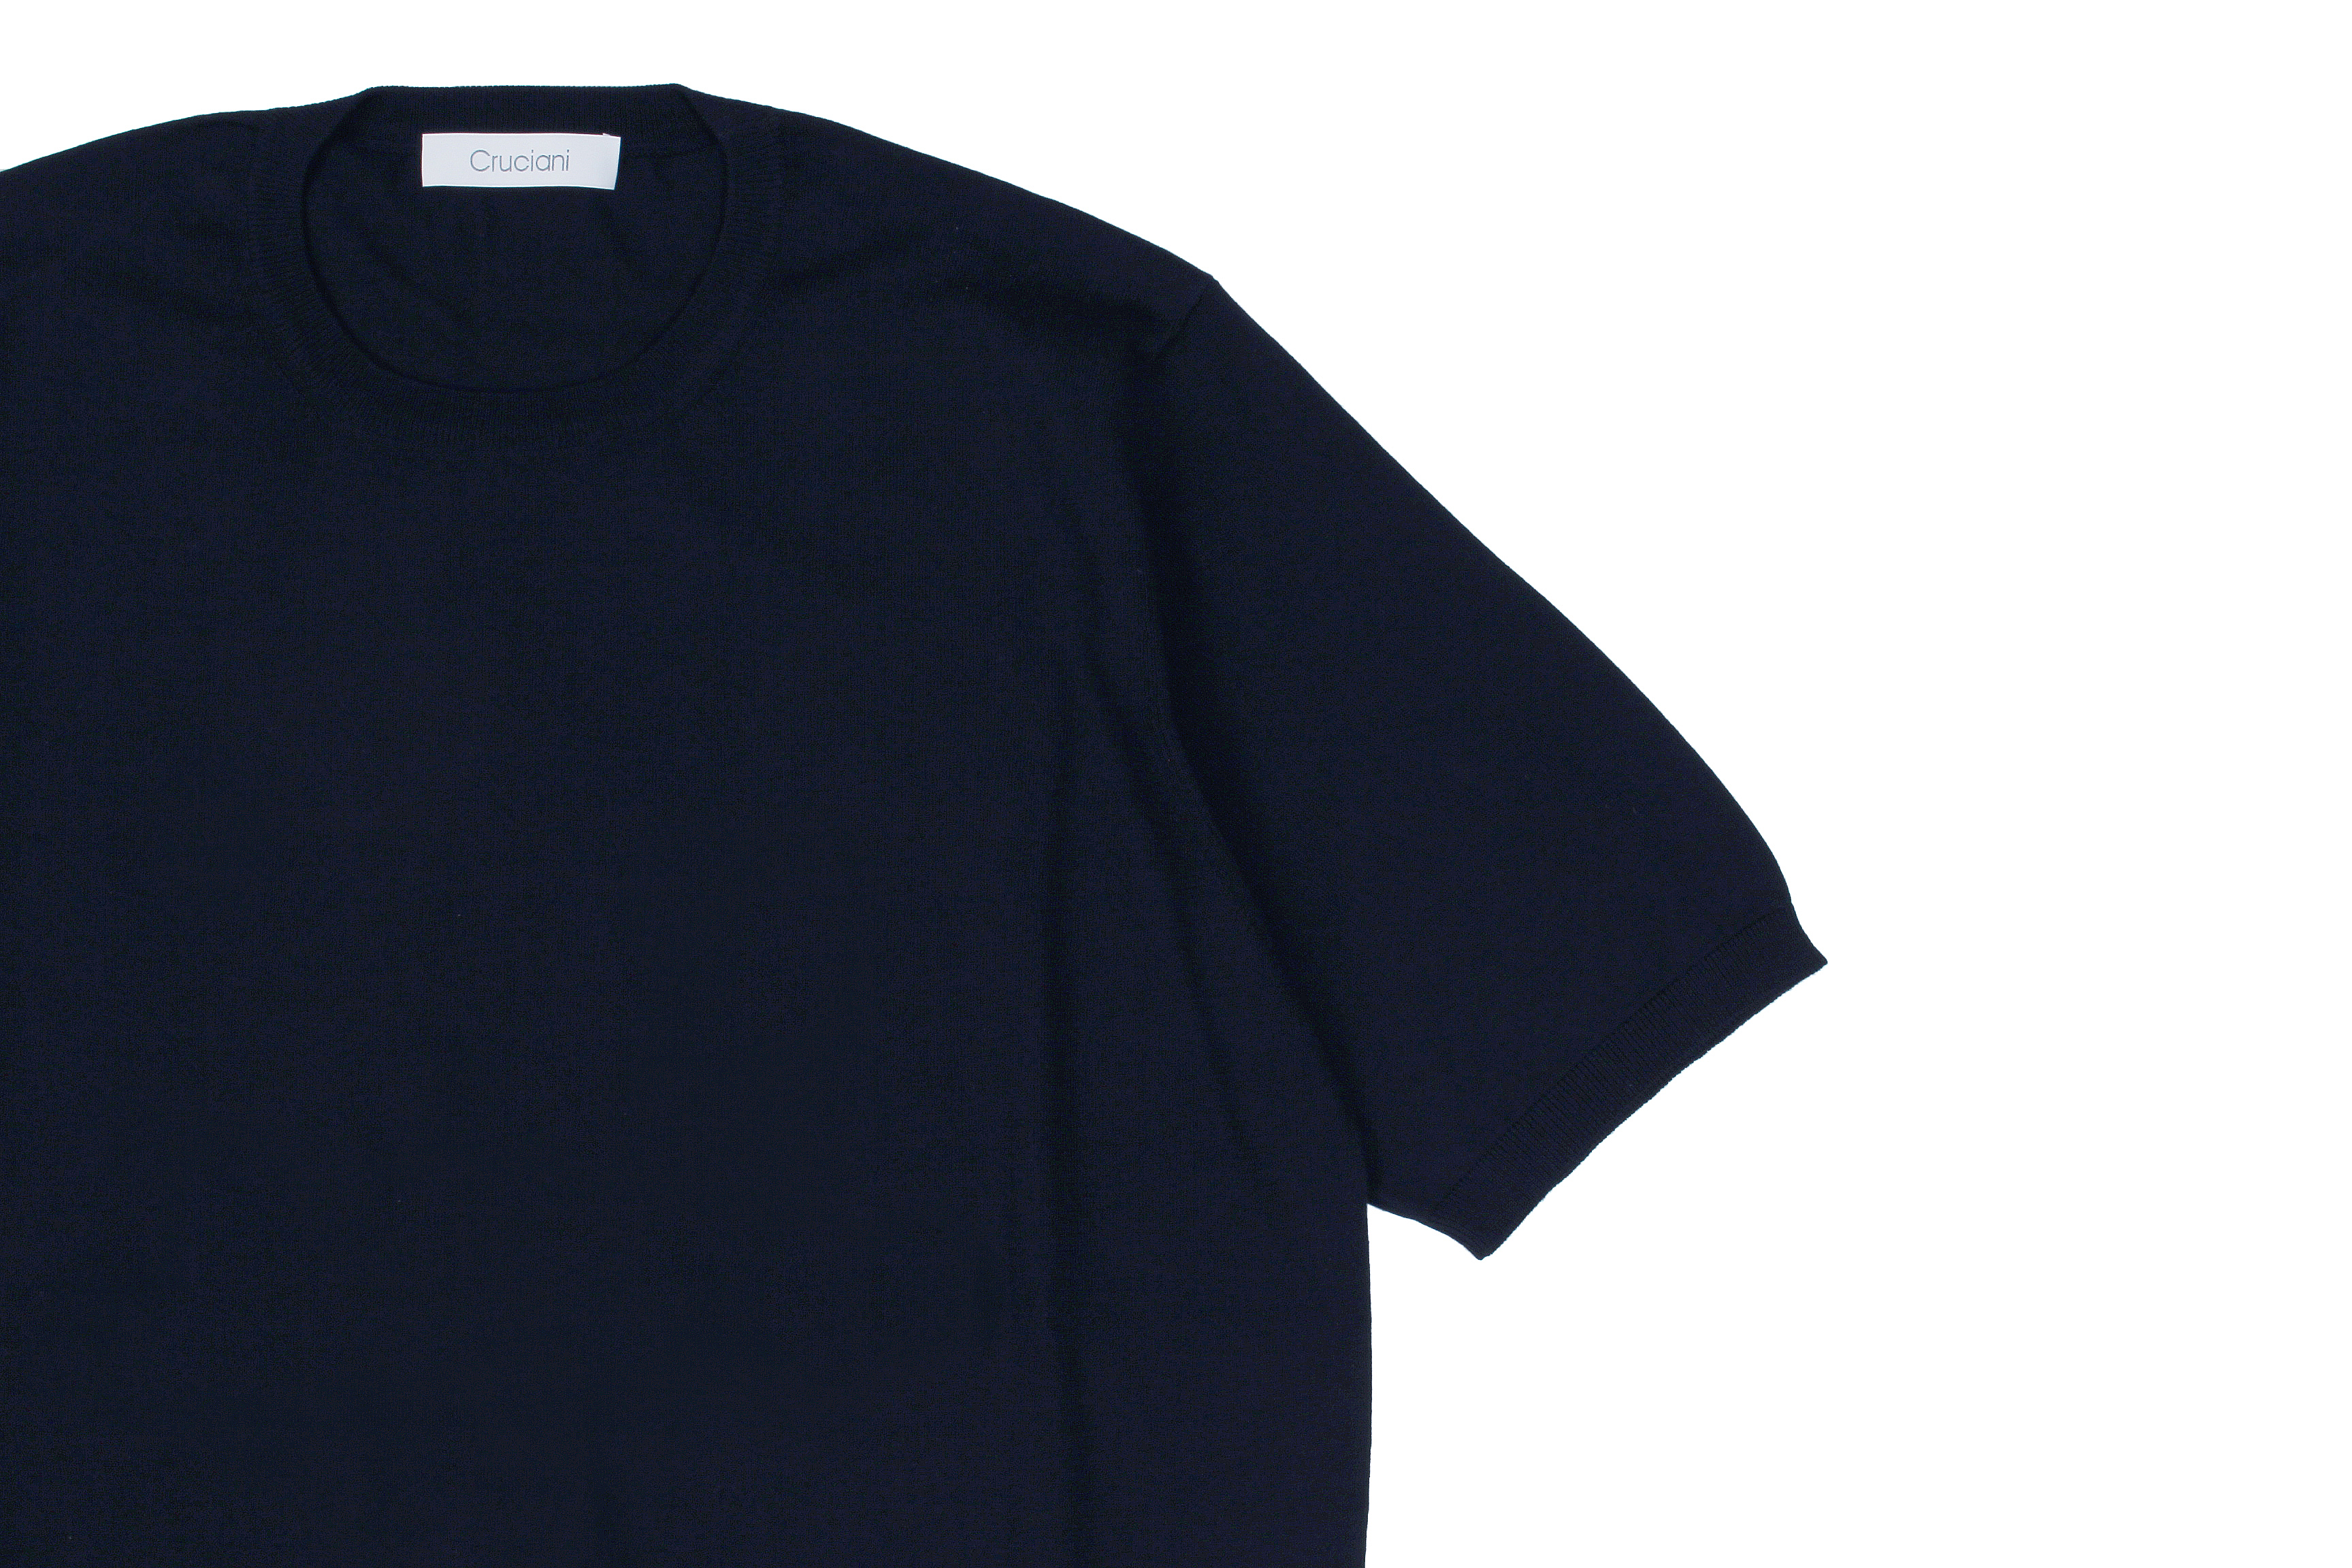 Cruciani(クルチアーニ) 33G Knit T-shirt 33ゲージ コットン ニット Tシャツ NAVY (ネイビー・Z0064)  made in italy (イタリア製) 2020 春夏新作  愛知 名古屋 altoediritto アルトエデリット ニットTEE